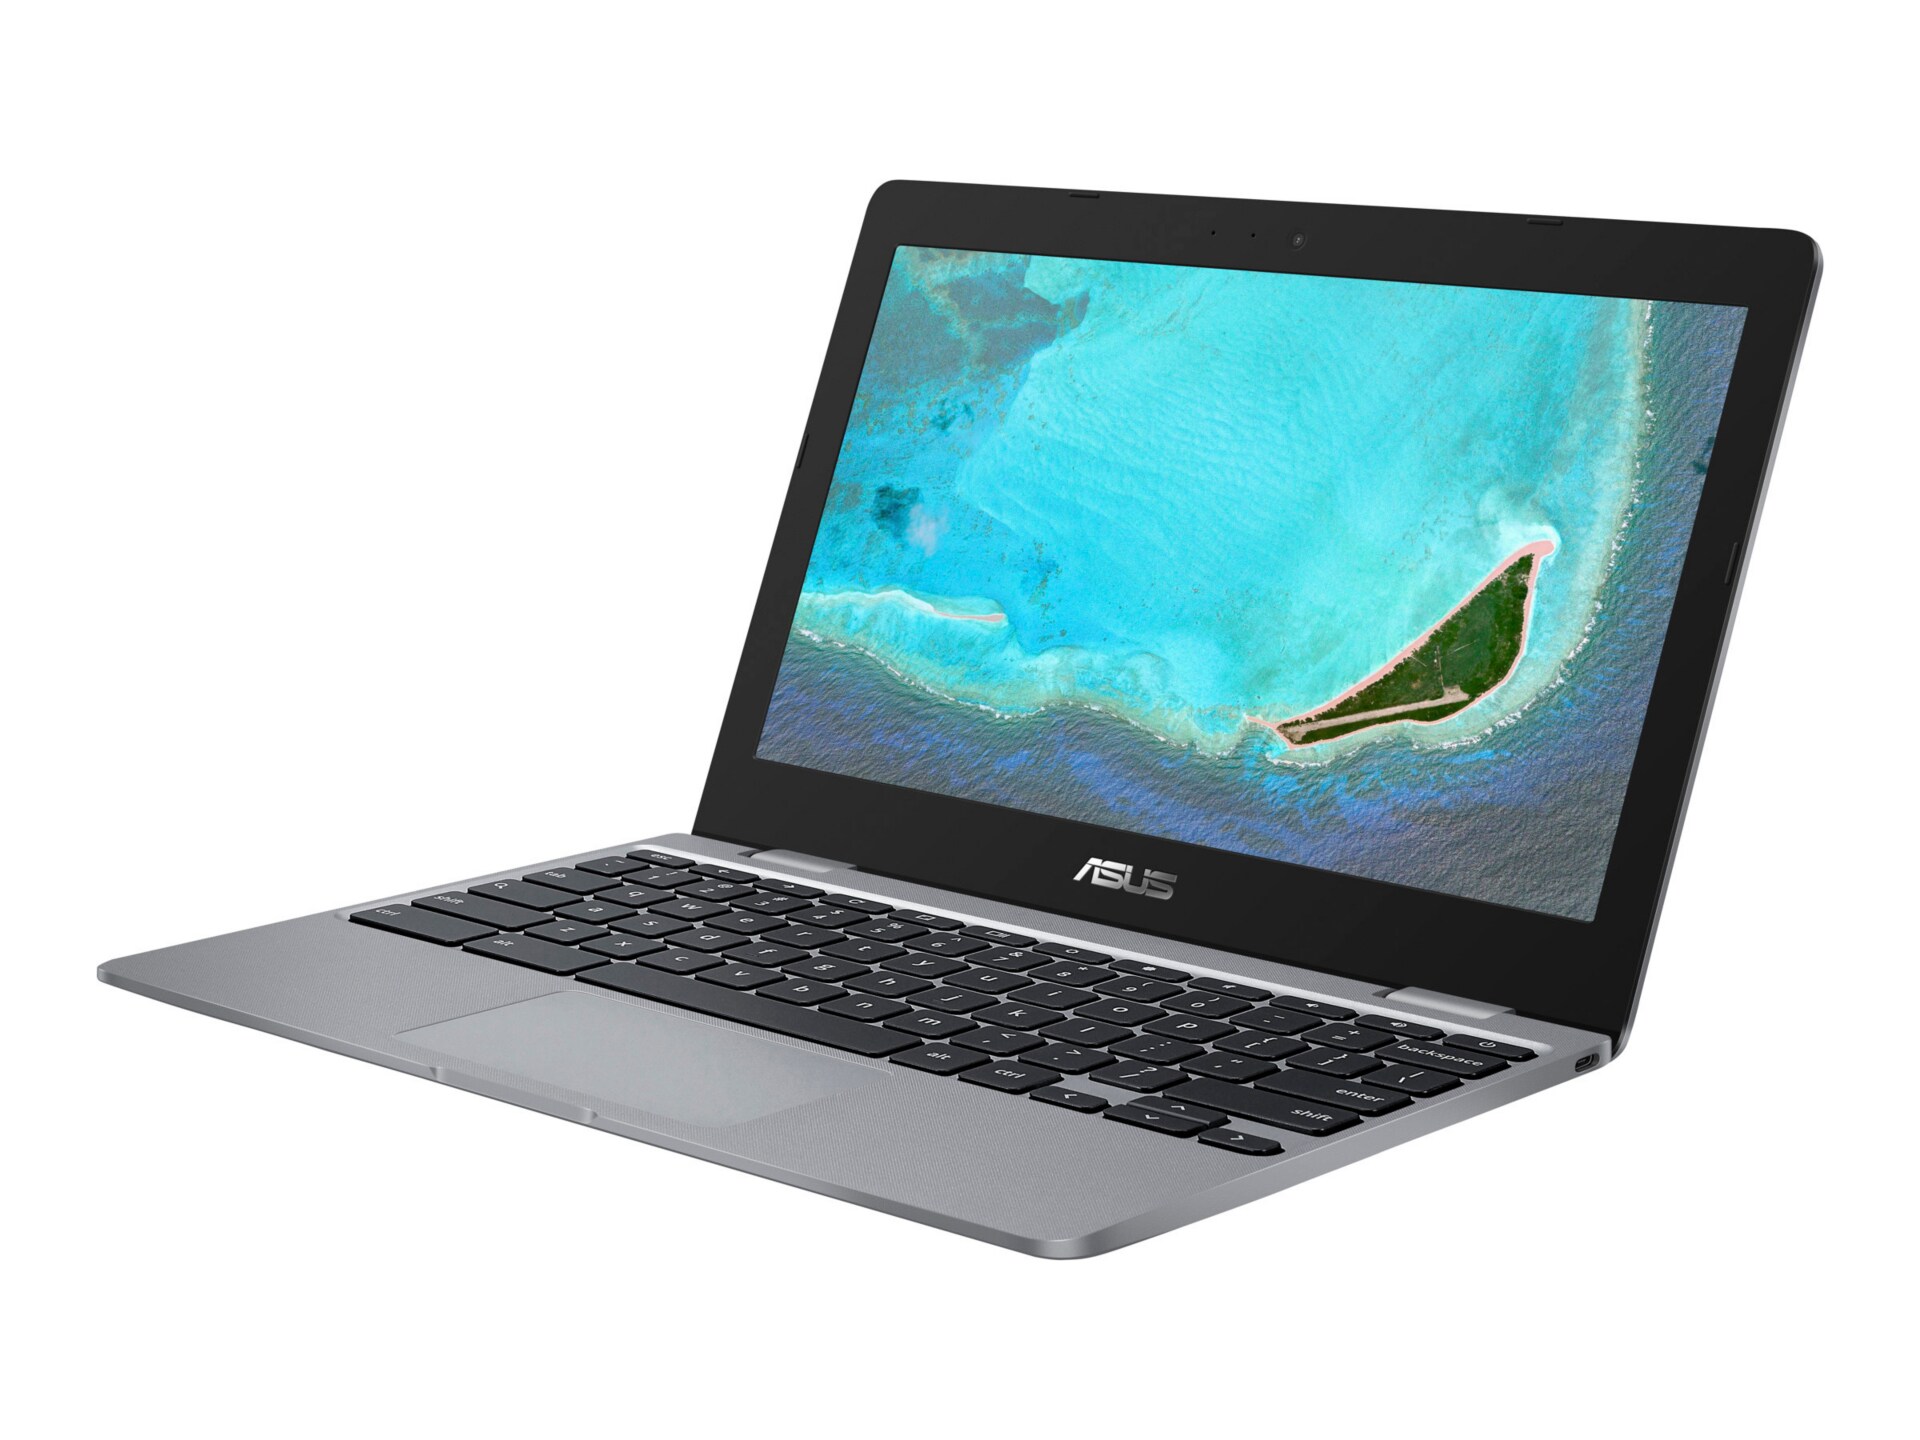 Asus Chromebook 12 C223NA-DH02 - 11.6" - Celeron N3350 - 4 GB RAM - 32 GB e